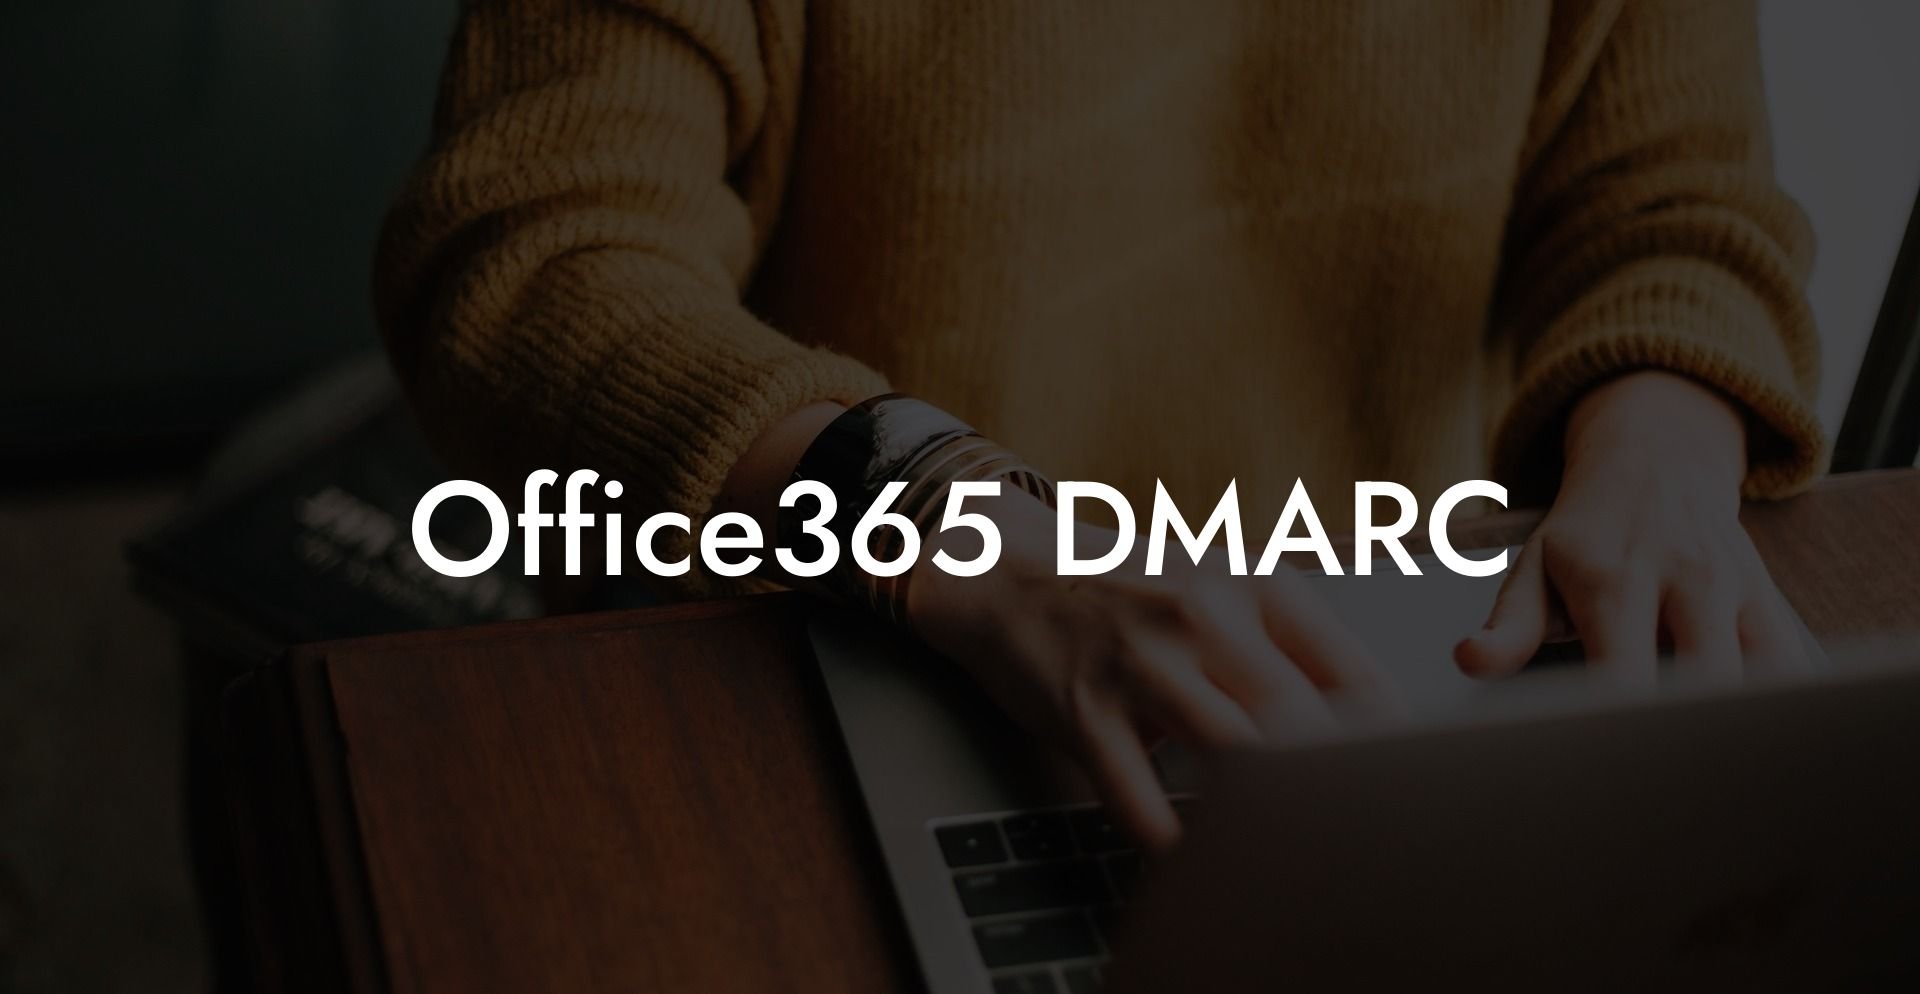 Office365 DMARC